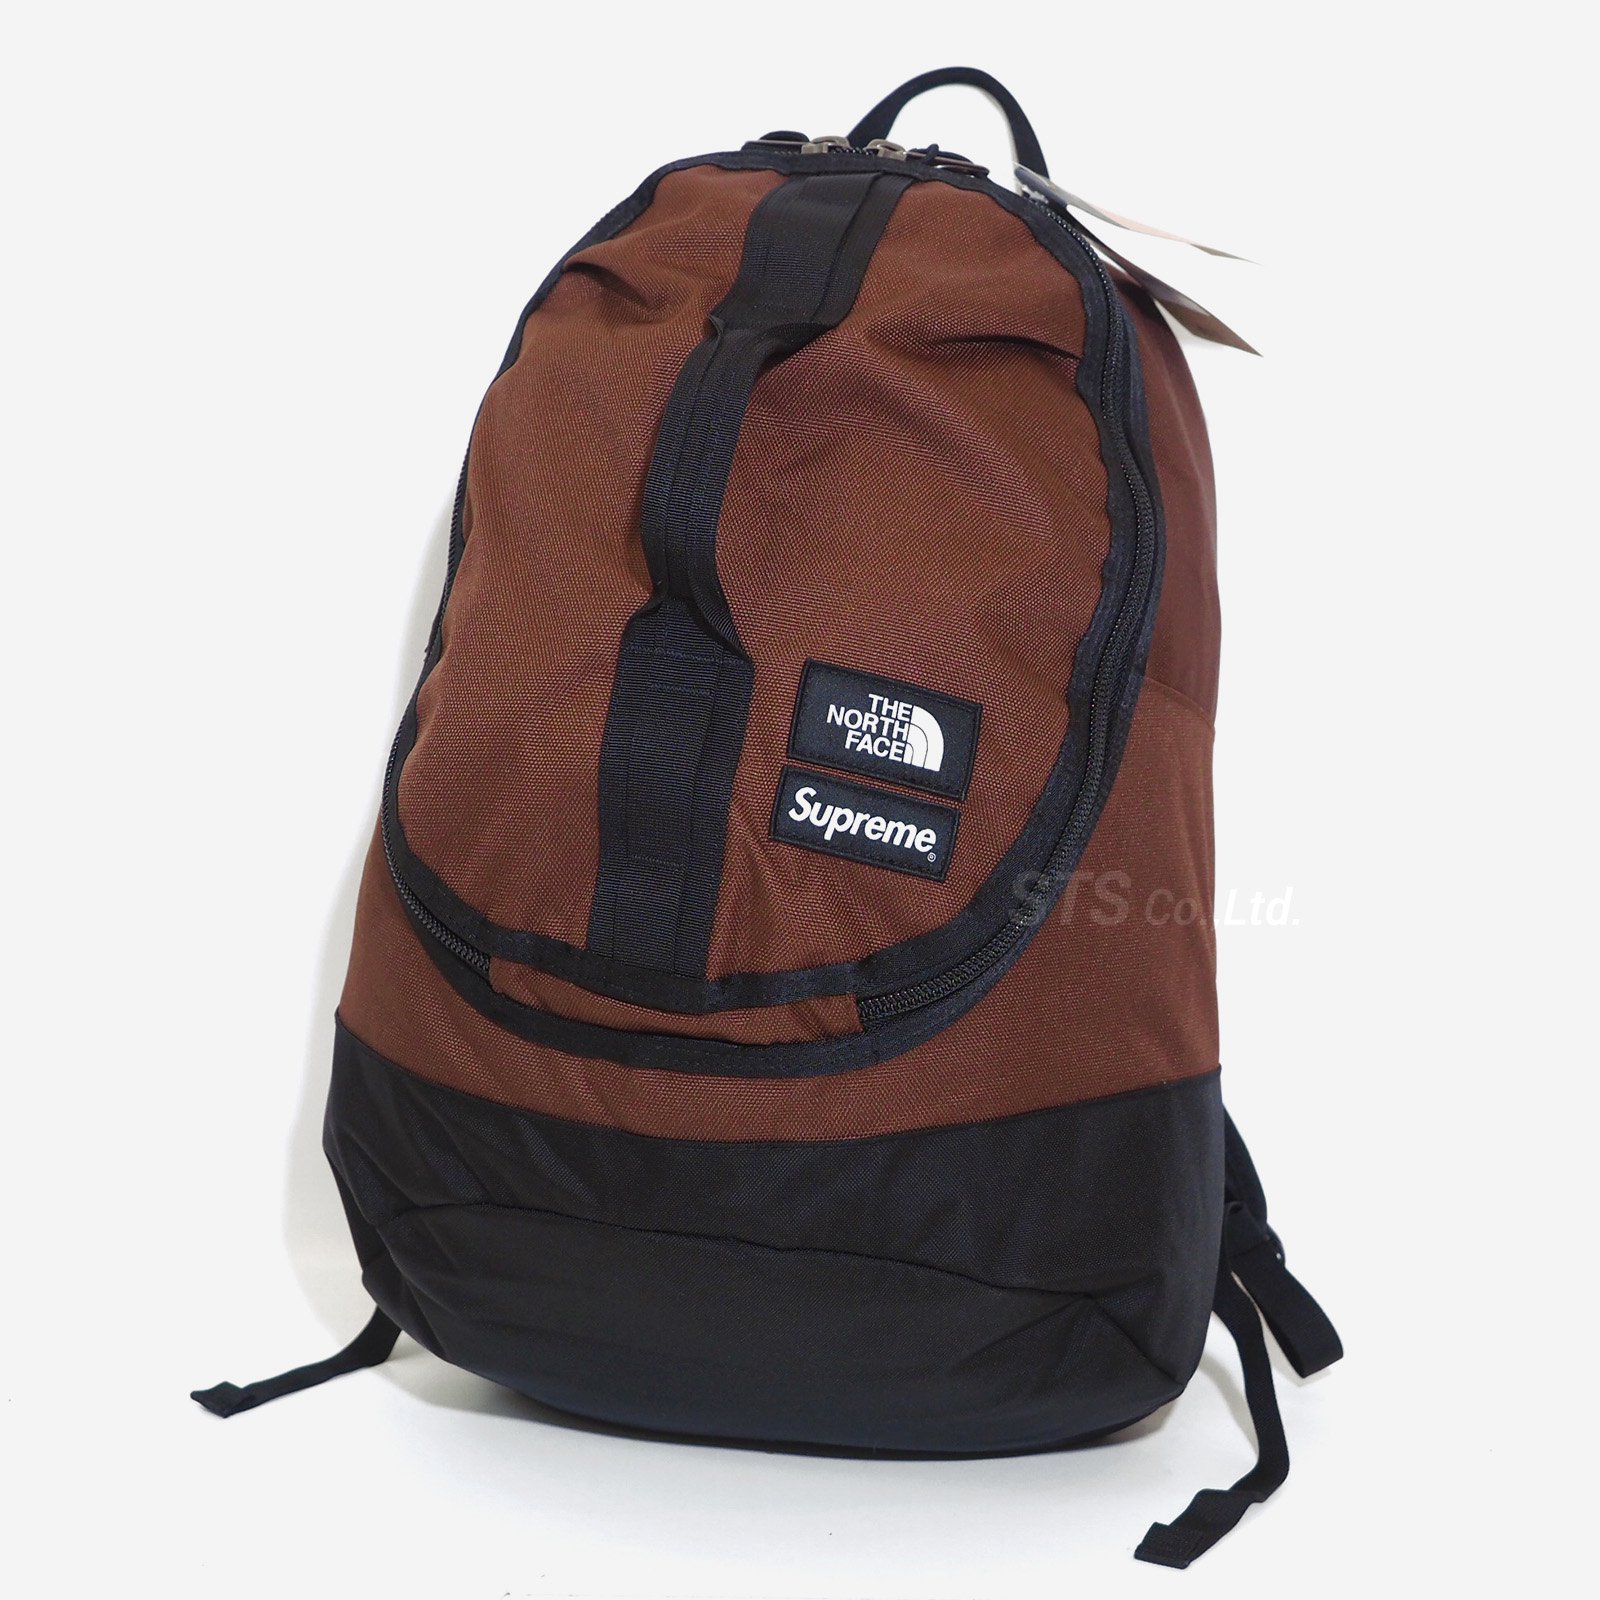 Supreme/The North Face Steep Tech Backpack - UG.SHAFT